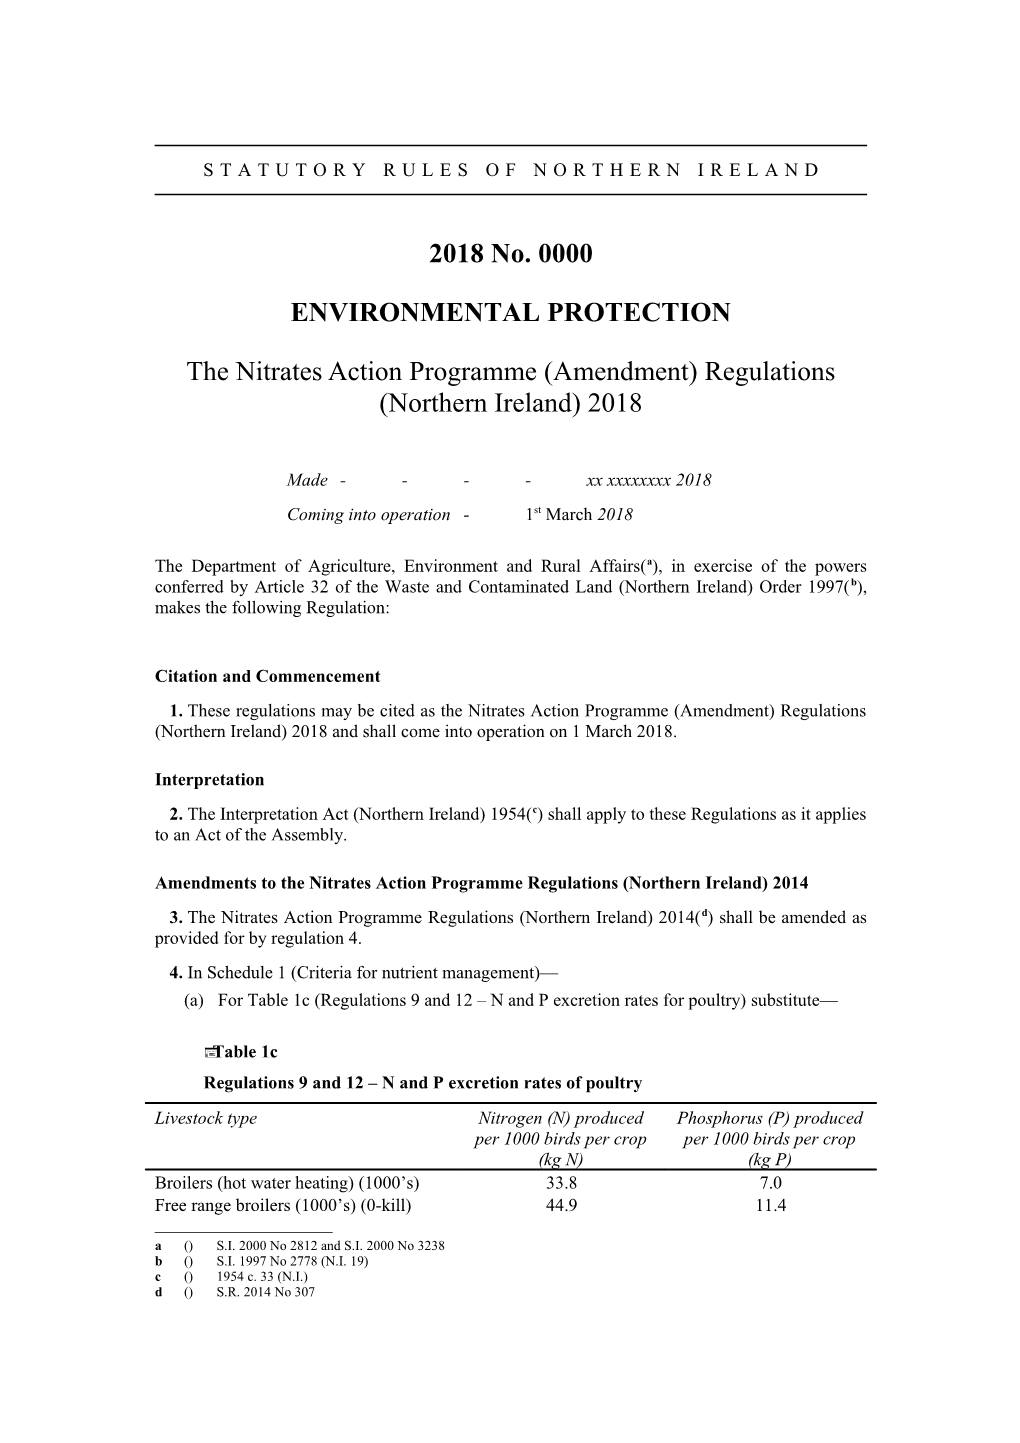 Thenitratesactionprogramme(Amendment)Regulations(Northernireland)2018